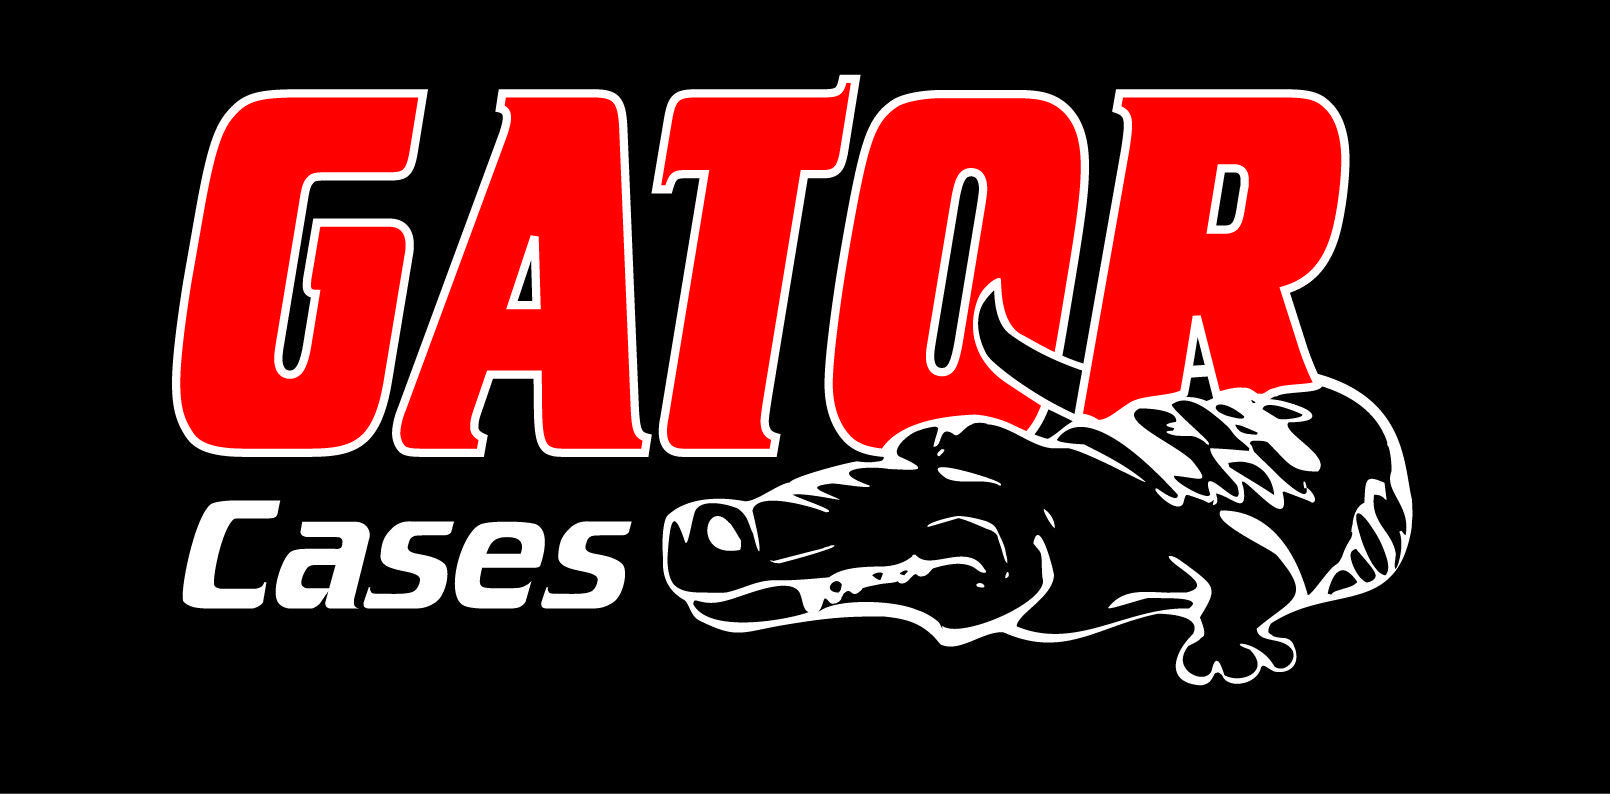 Gator Vector Logo - Downloads - Gator Cases